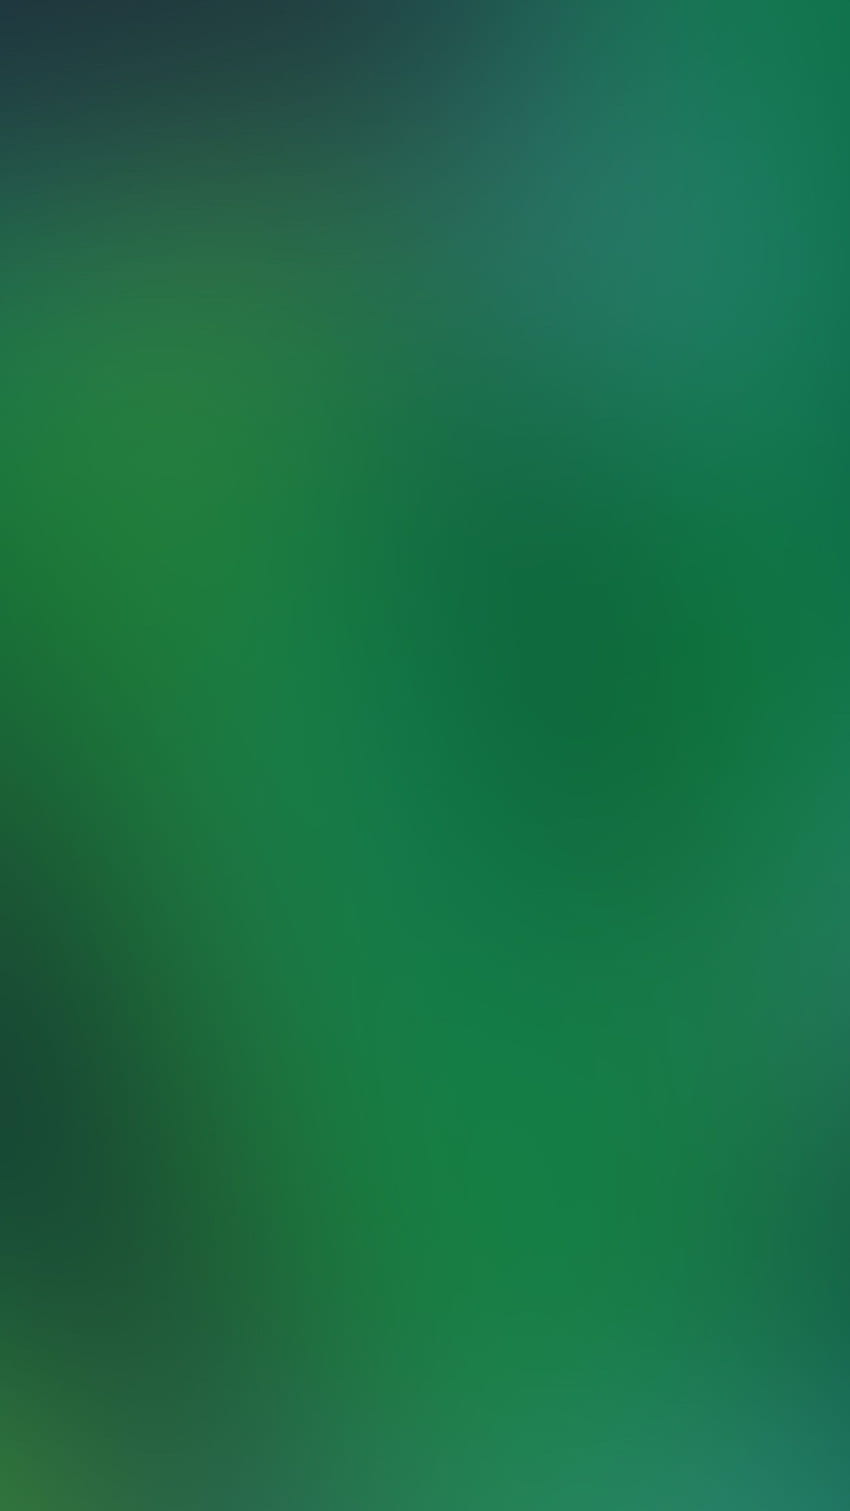 iPhone7. gradación de desenfoque azul verde fondo de pantalla del teléfono